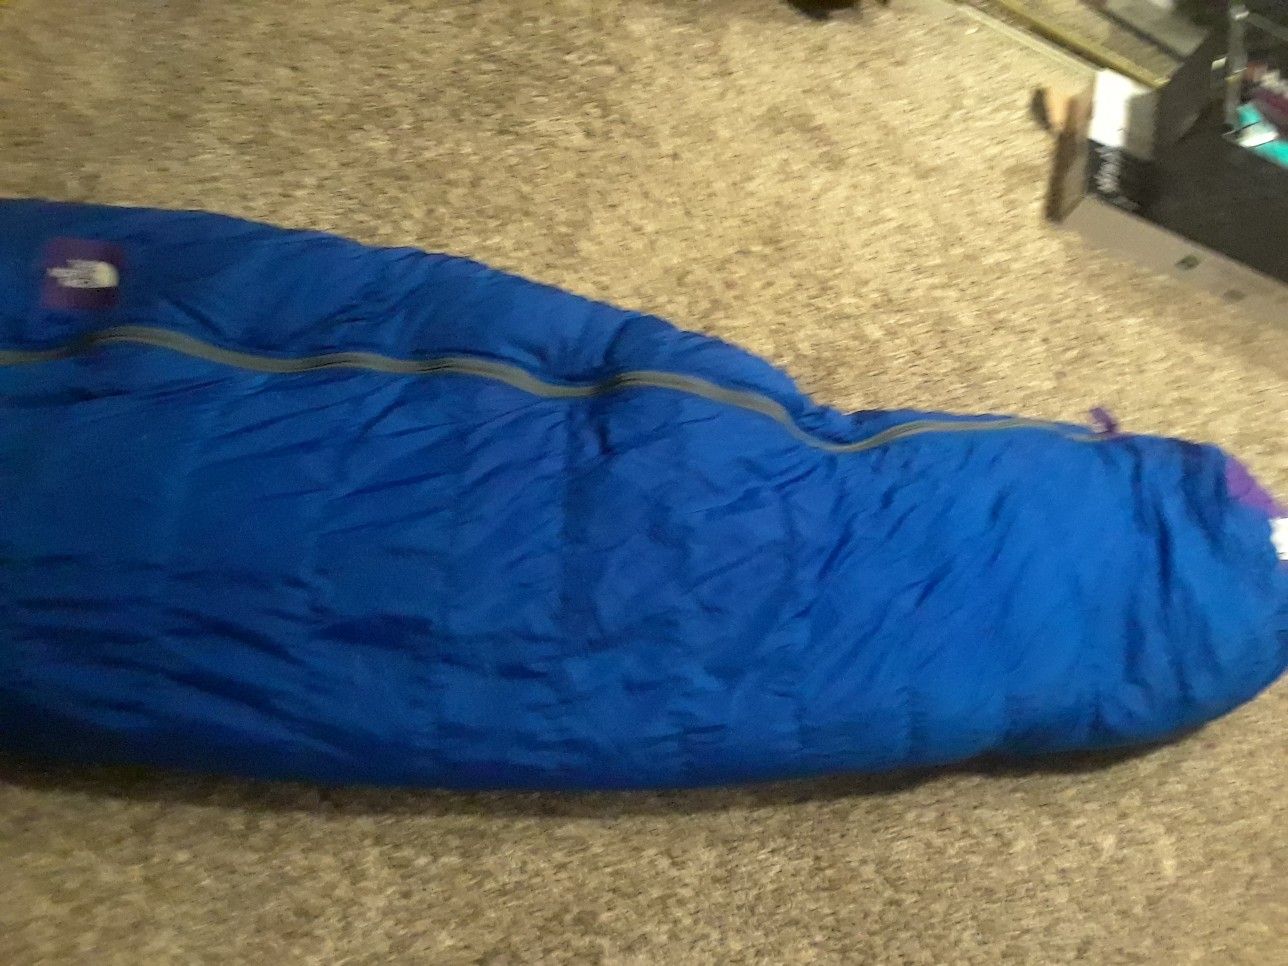 North face sleeping bag